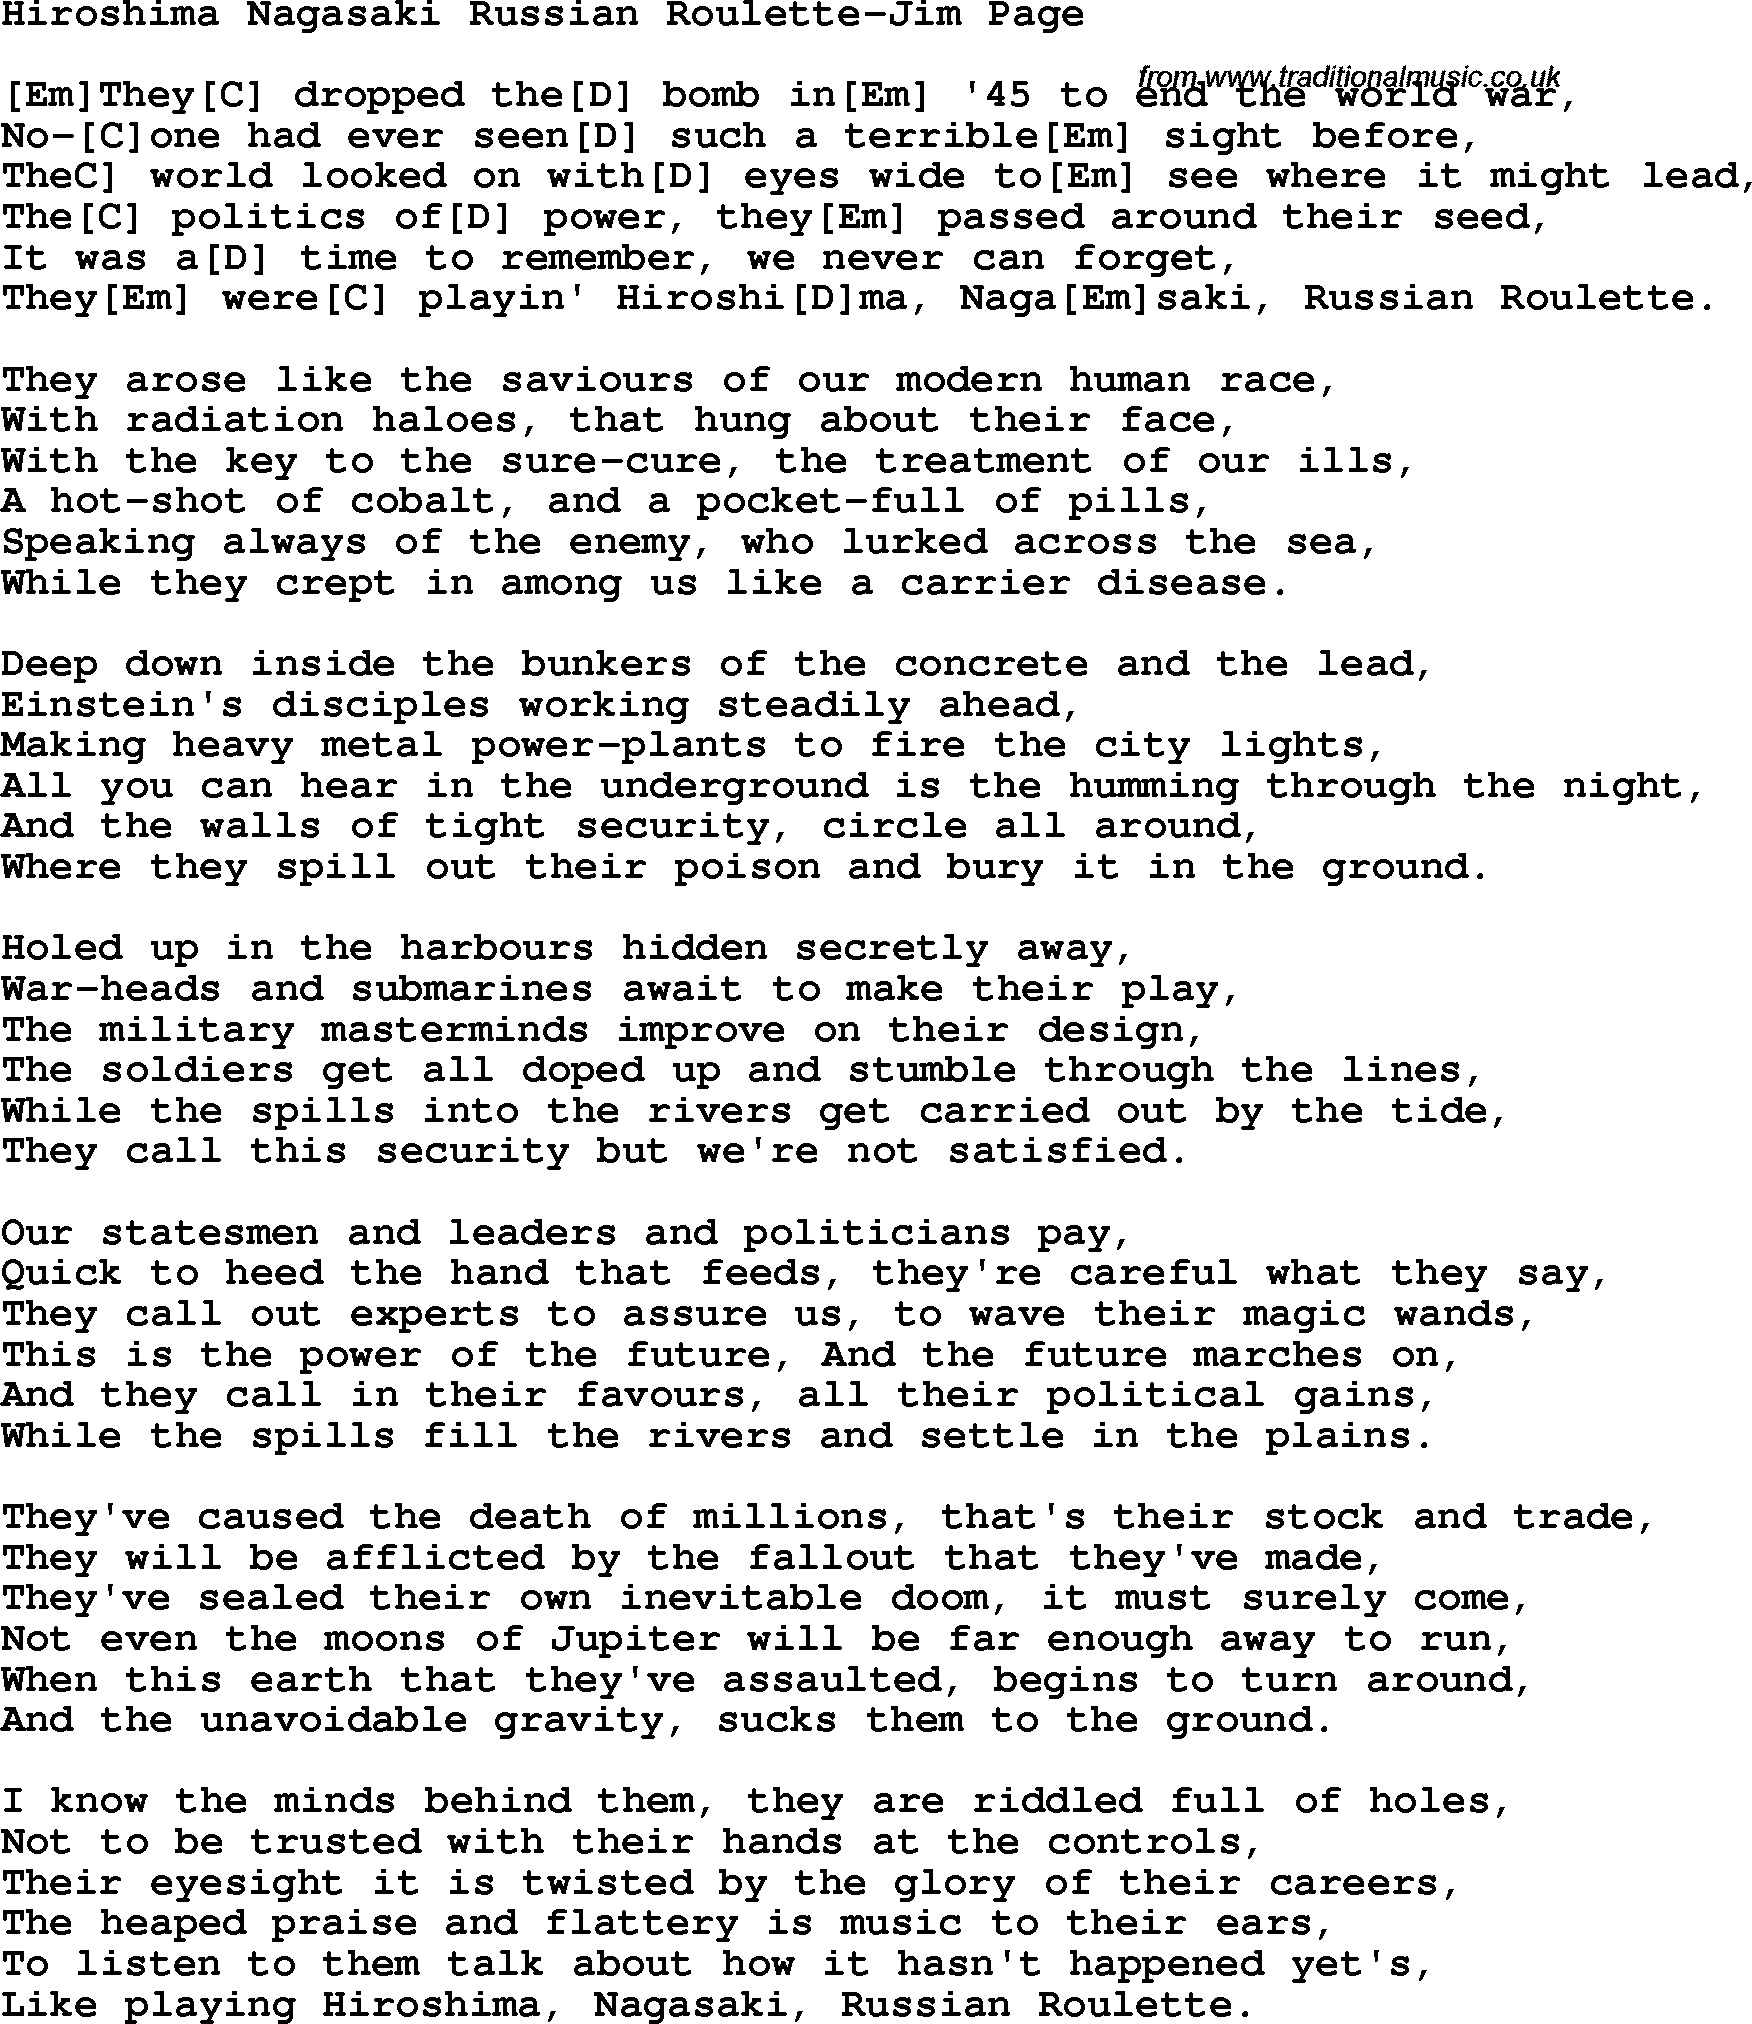 Protest Song Hiroshima Nagasaki Russian Roulette-Jim Page lyrics and chords